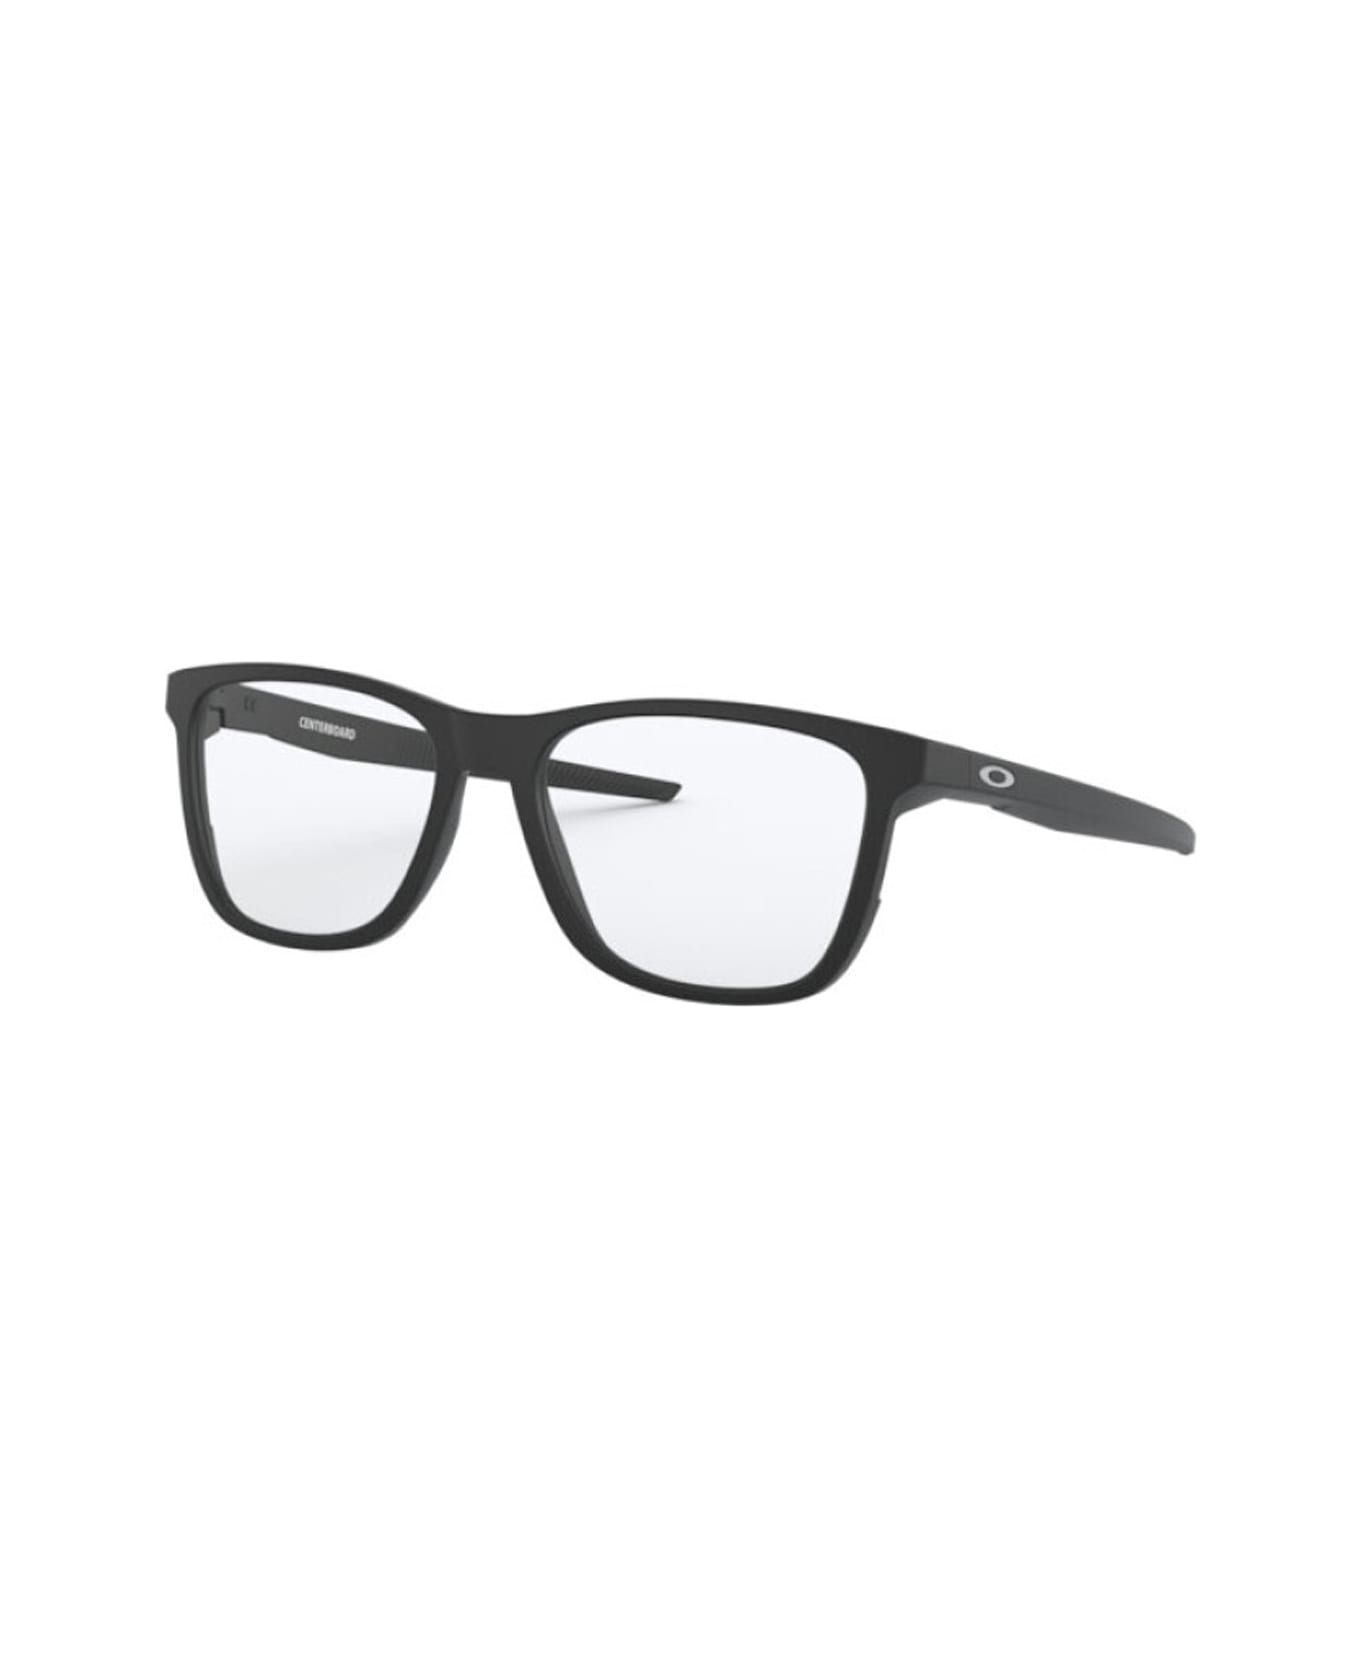 Oakley Ox8163 Glasses - Nero アイウェア